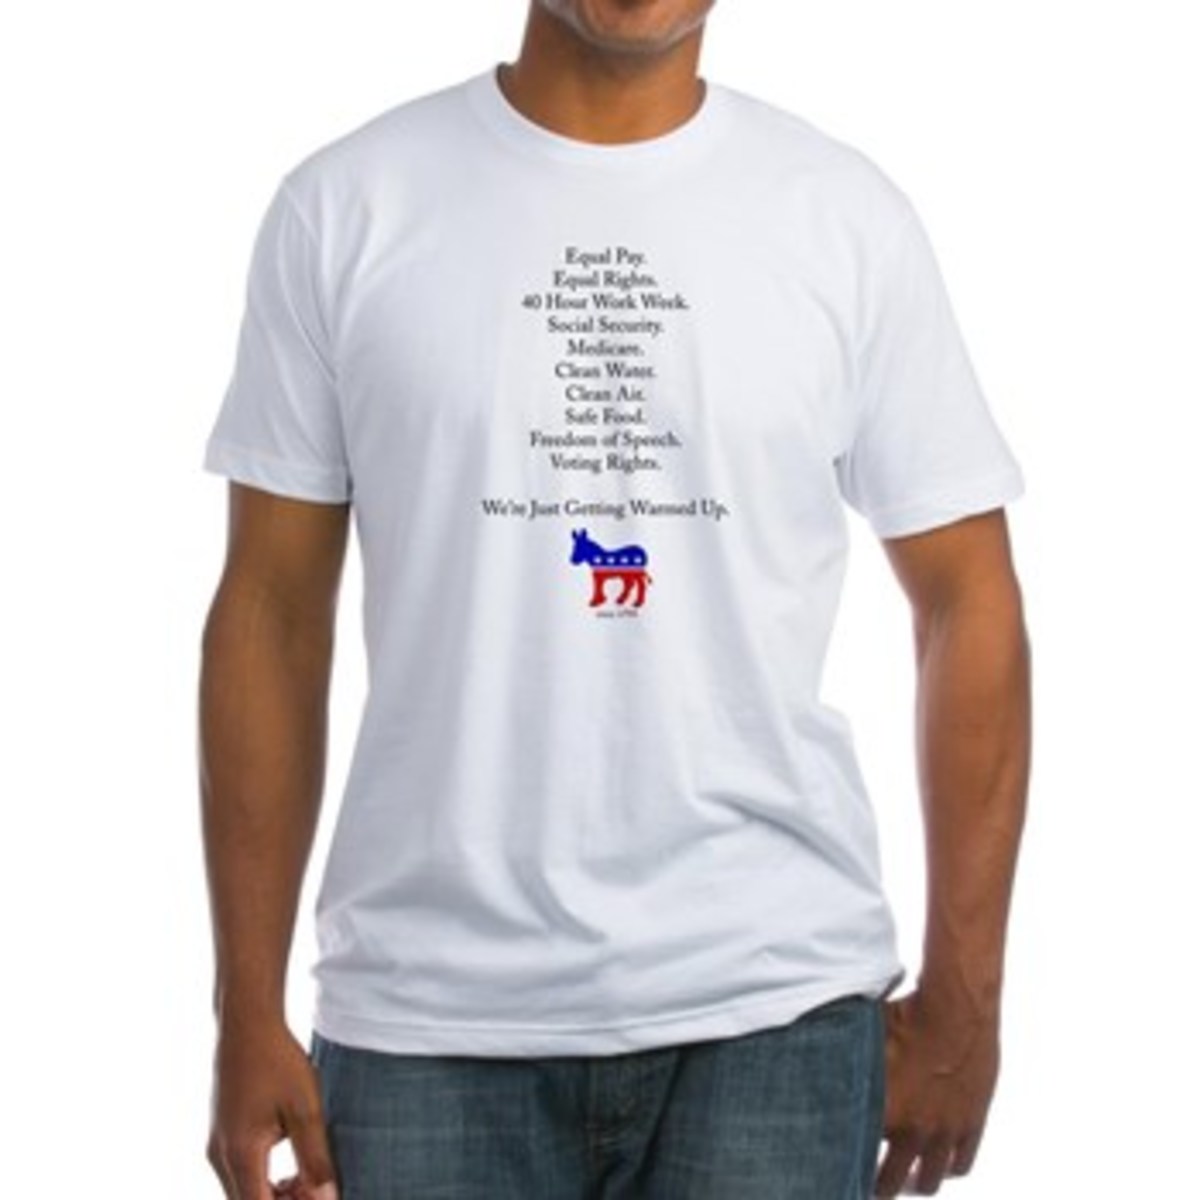 Democrats: Just Getting Warmed Up T-Shirt